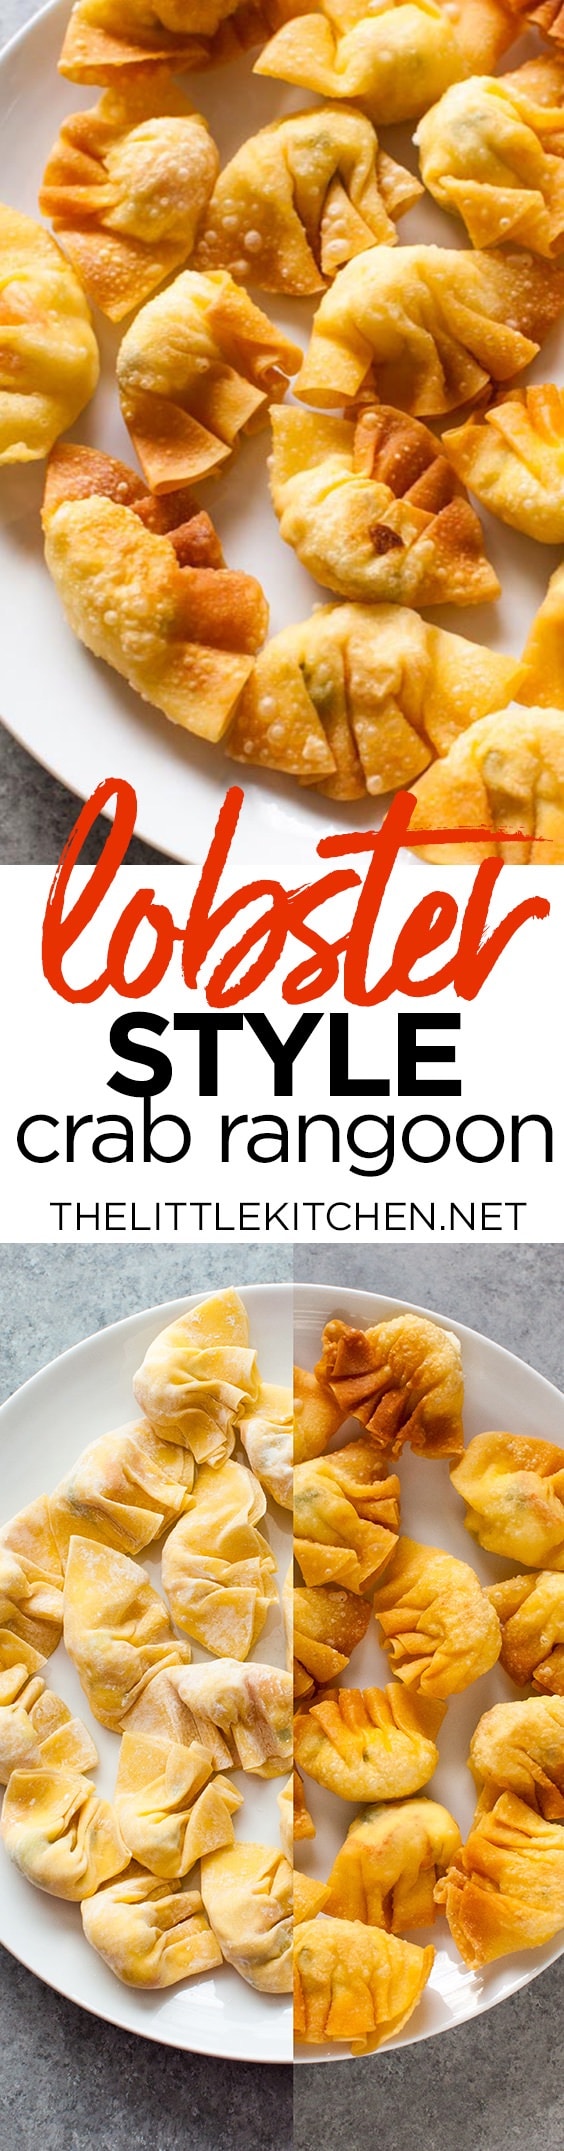 Crab Rangoon recipe from thelittlekitchen.net